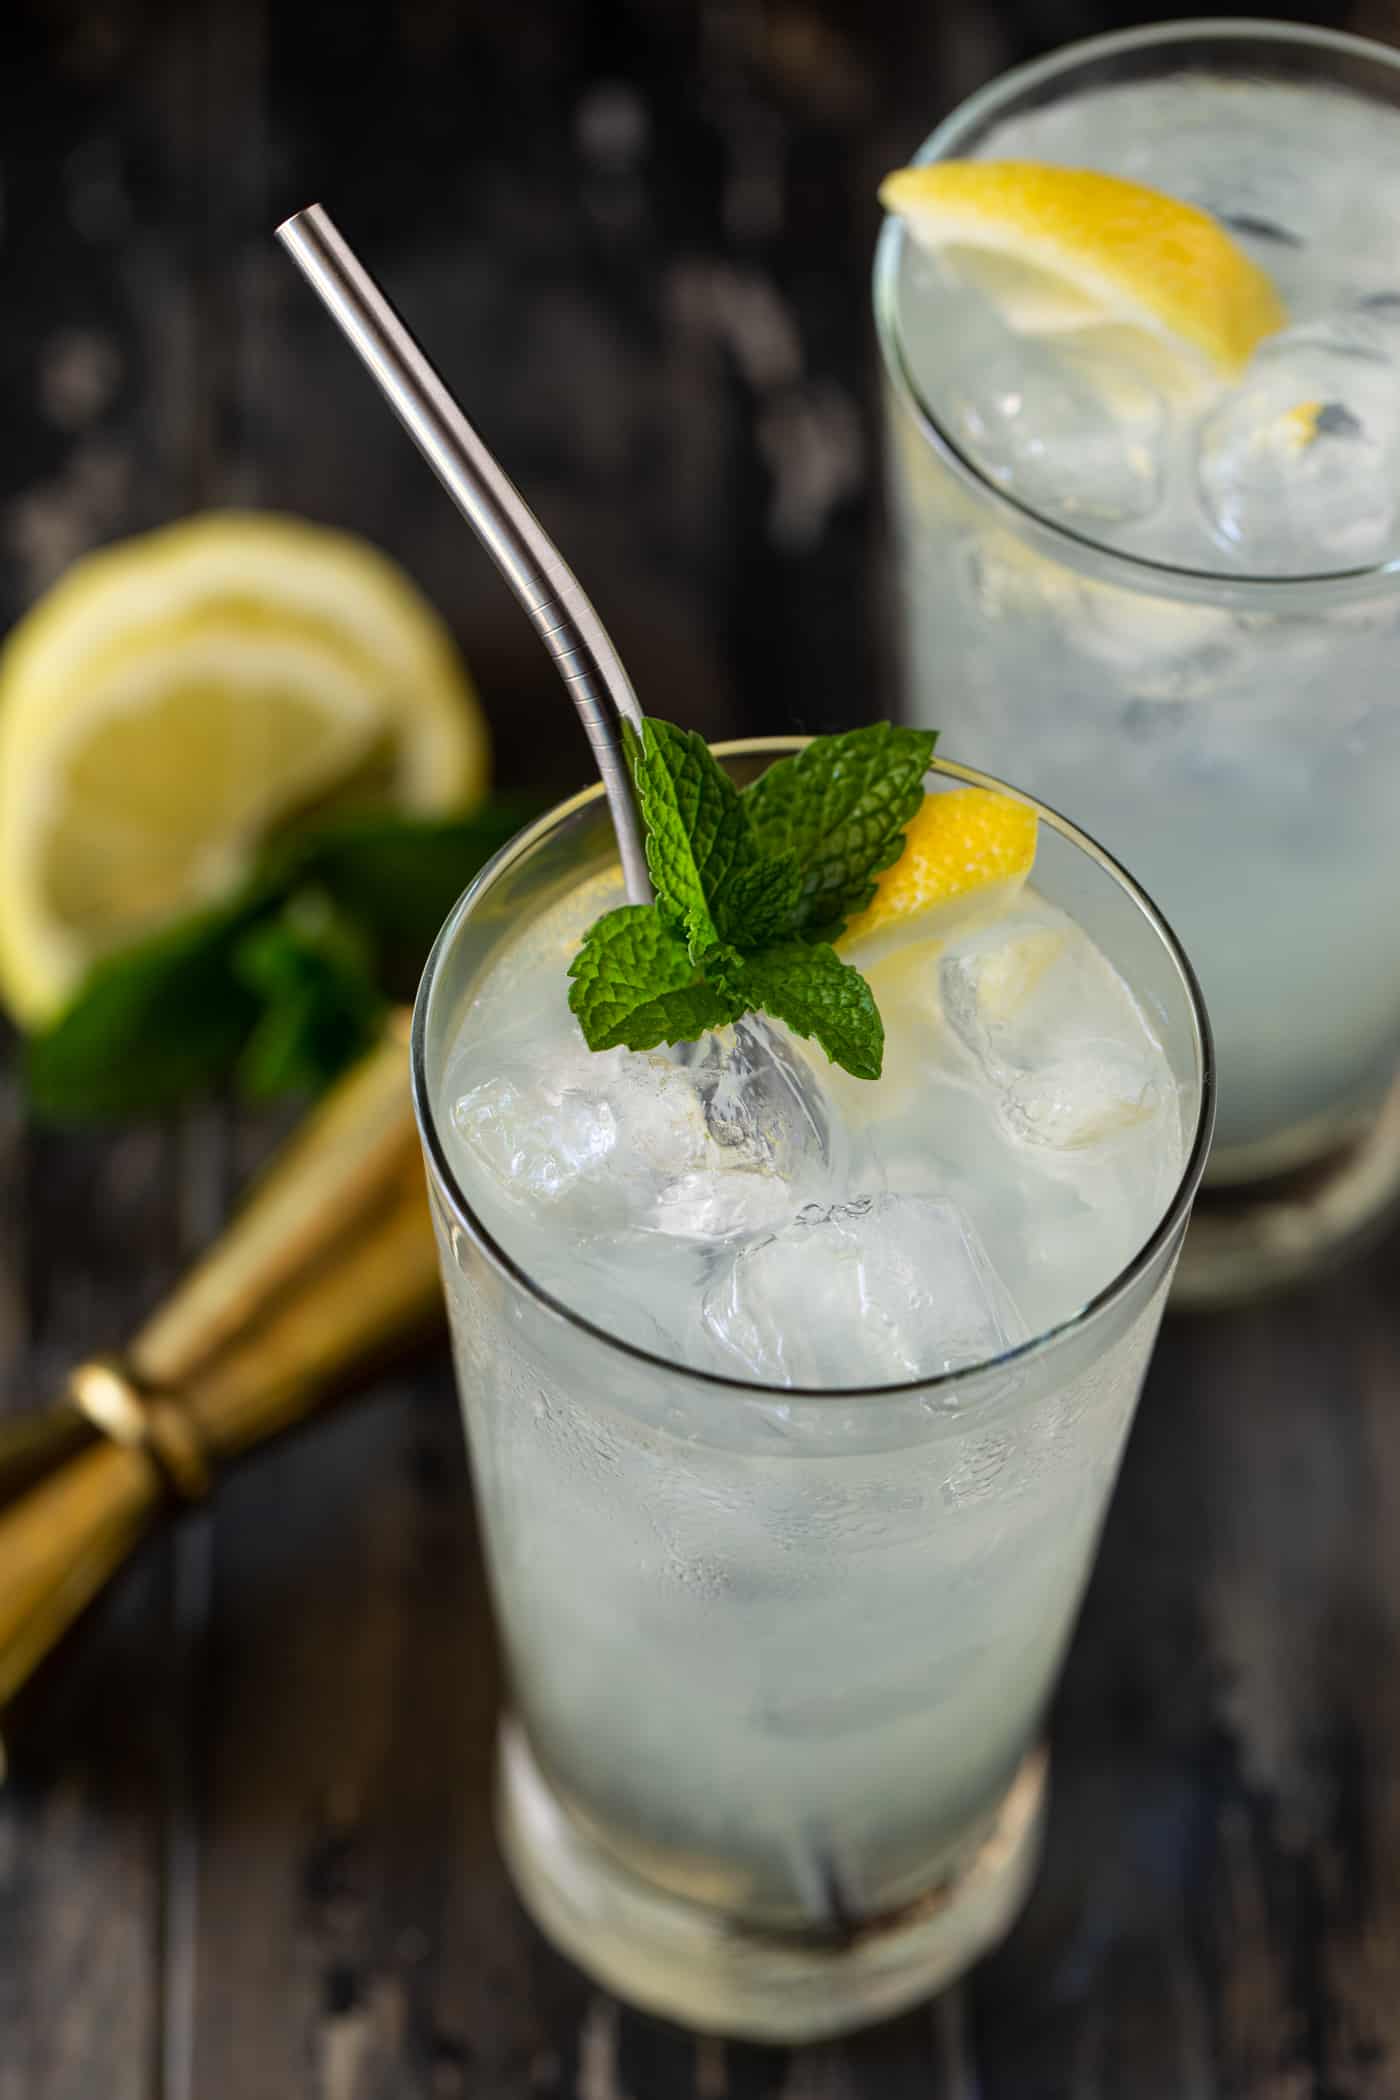 A glass of vodka lemonade with lemons.